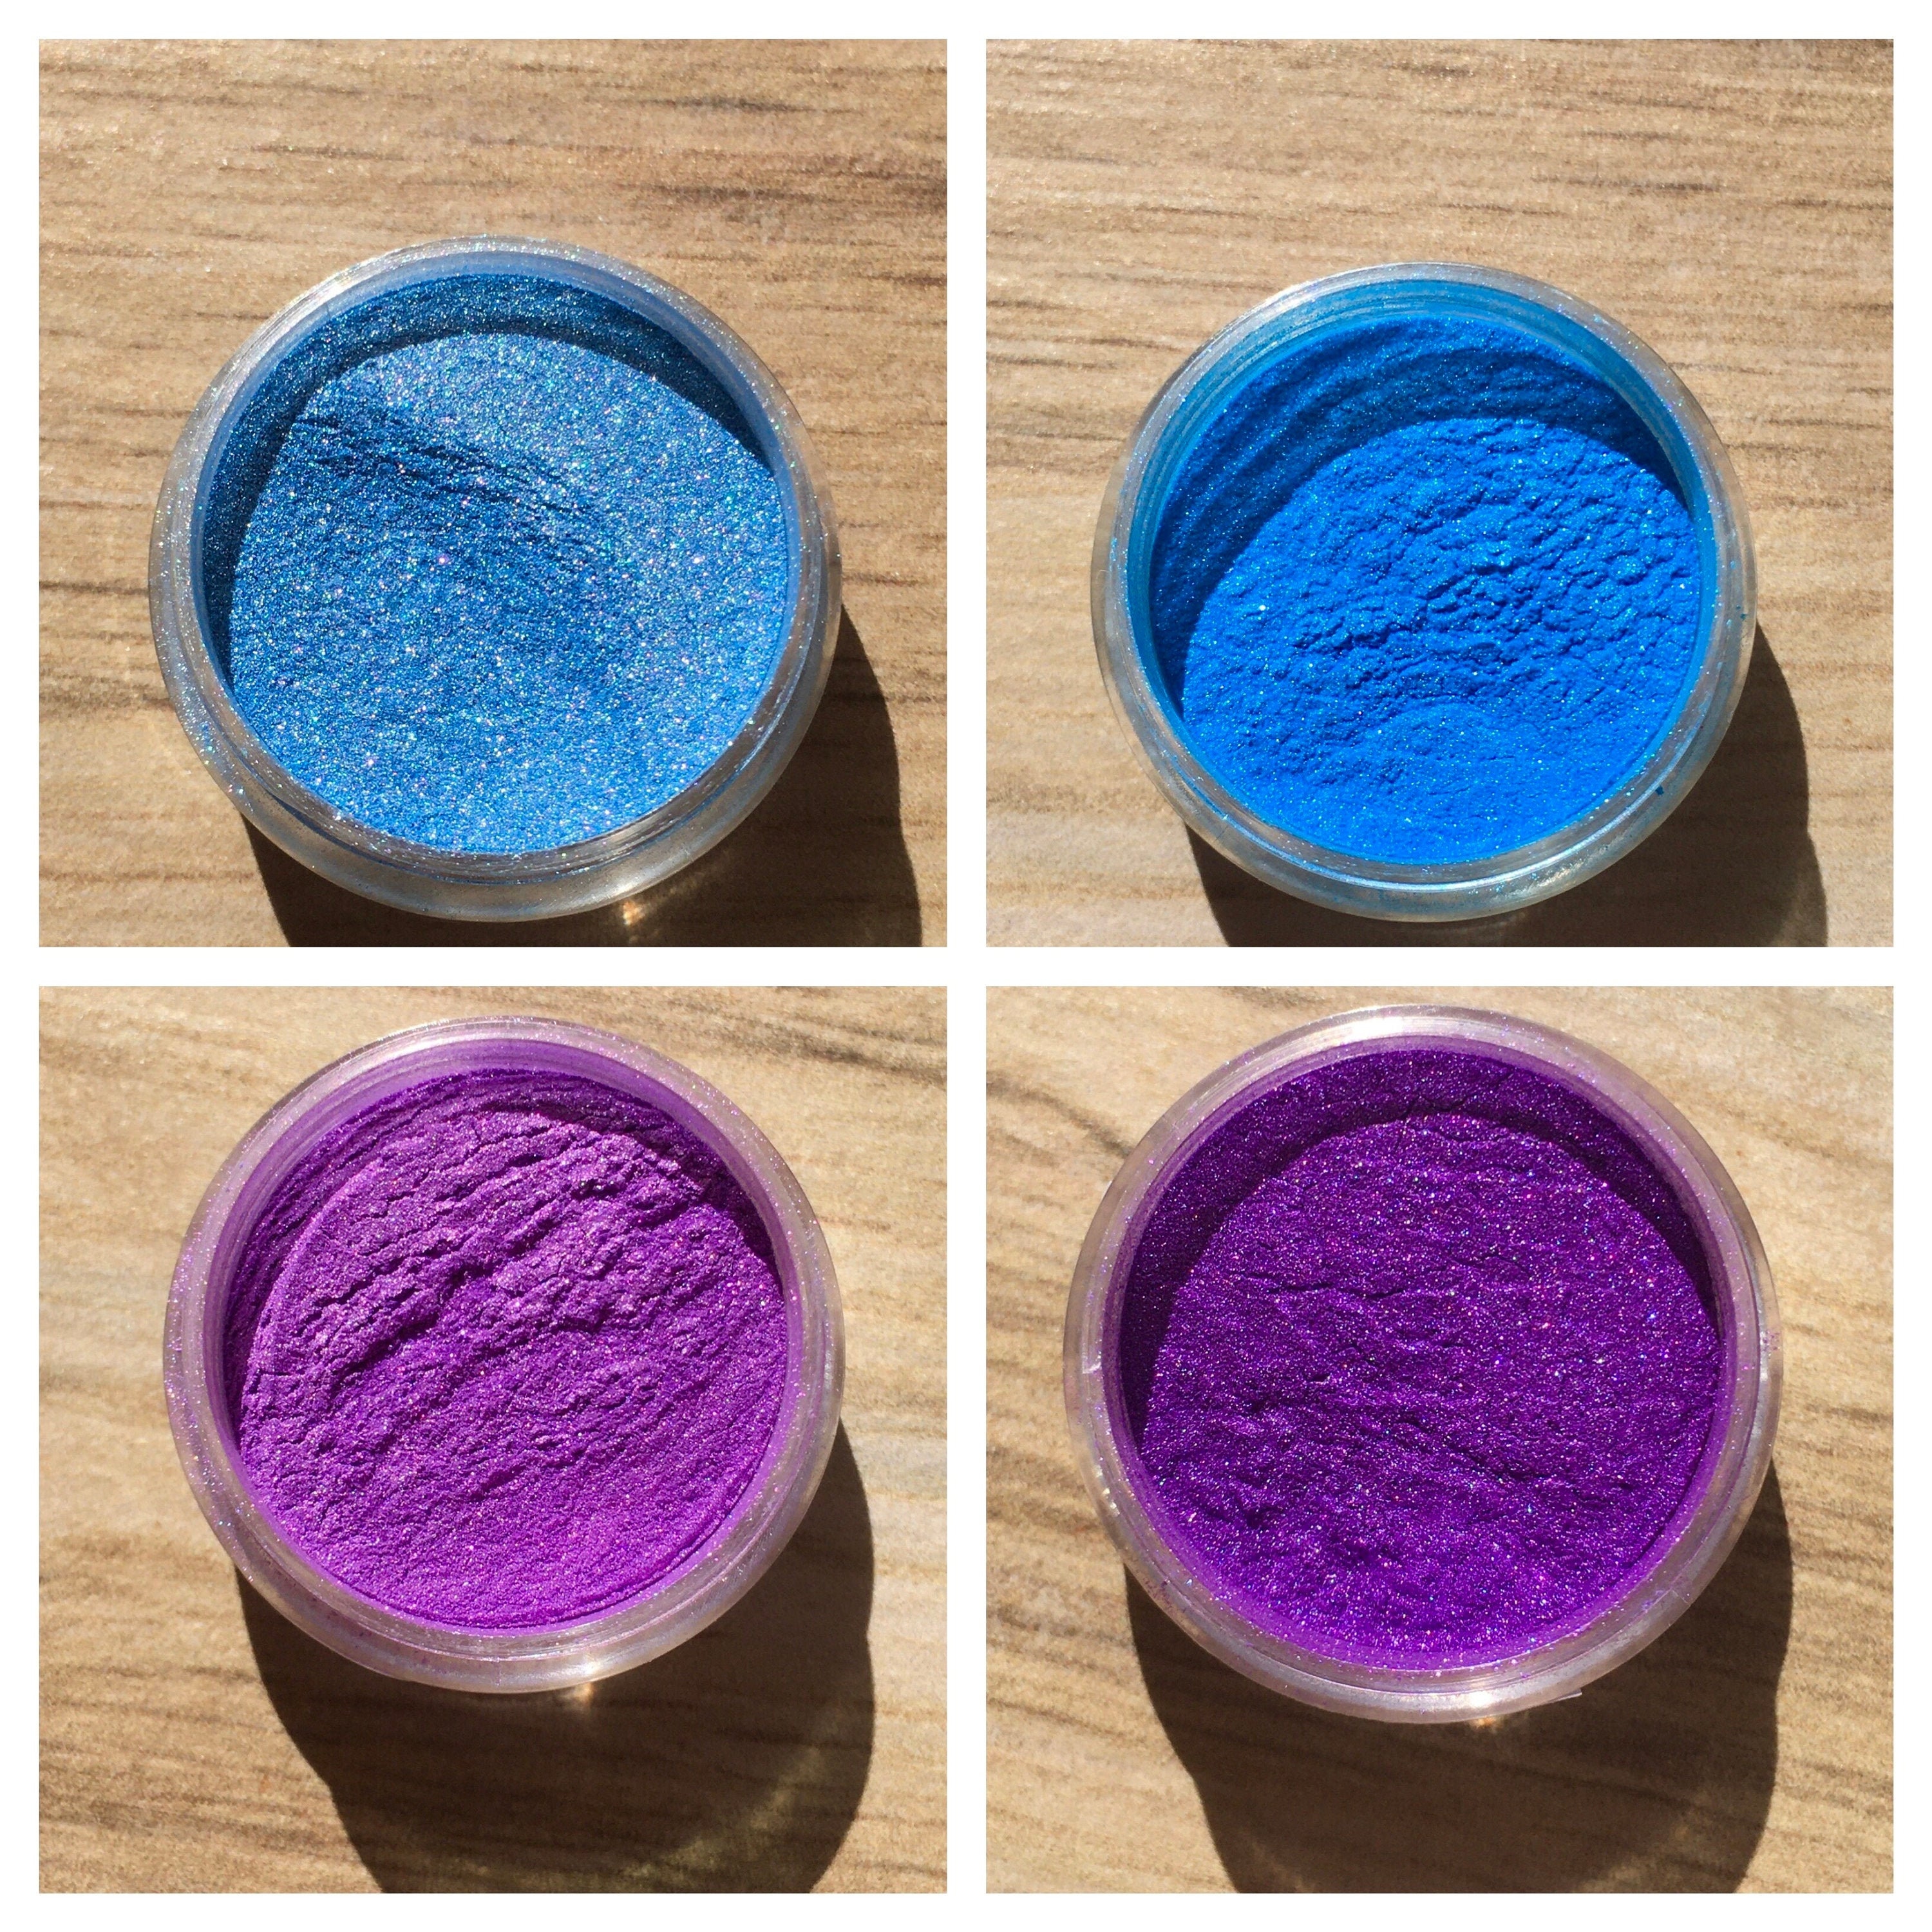 Purple Mica Powder 